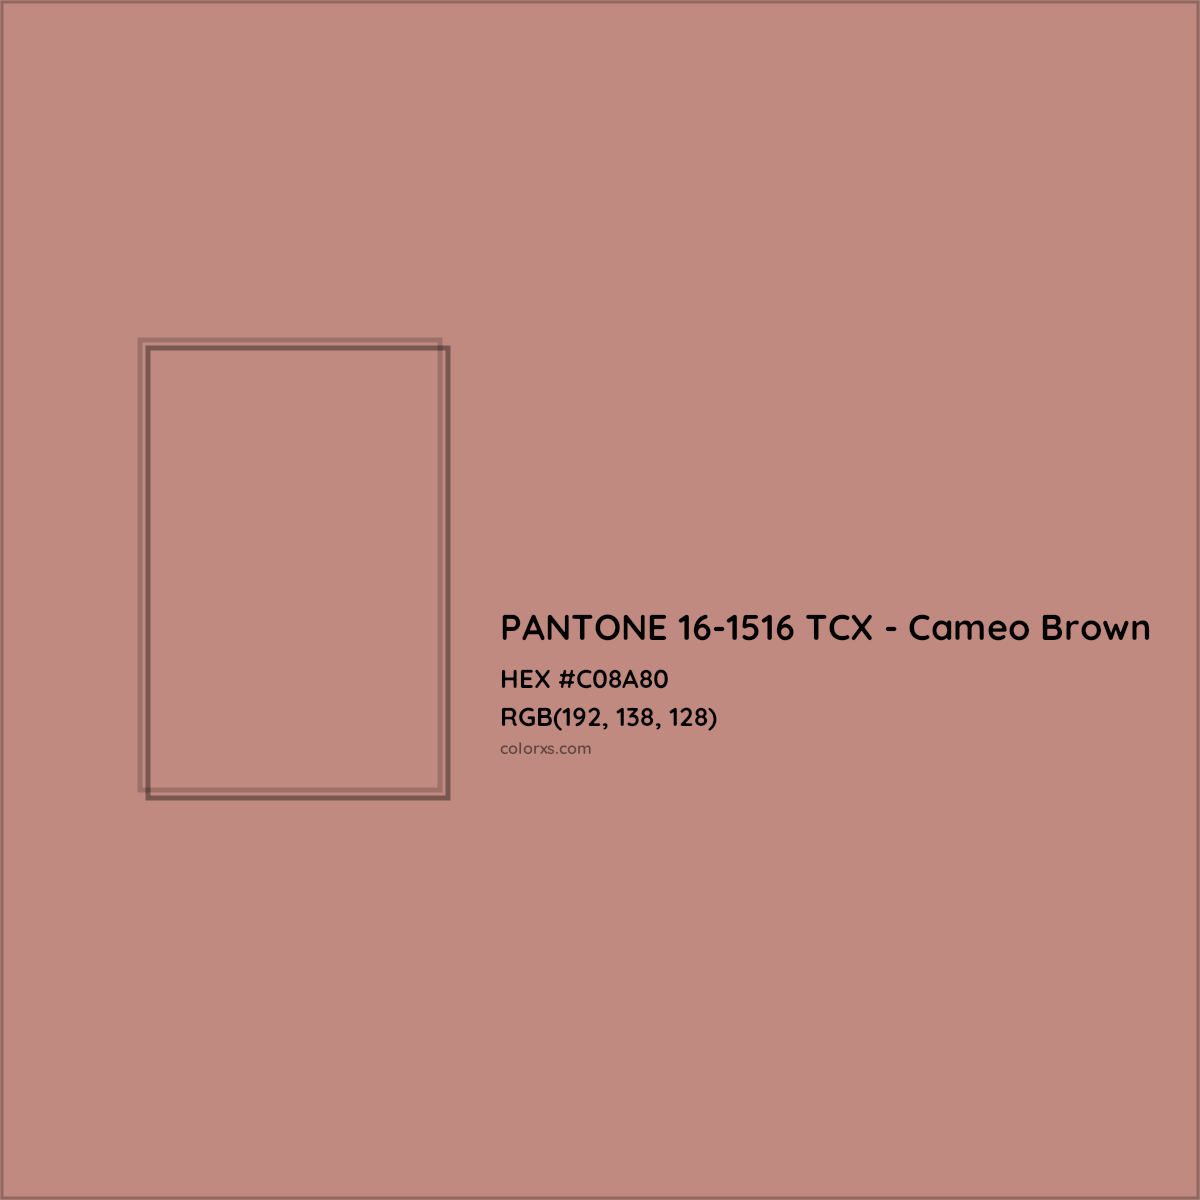 HEX #C08A80 PANTONE 16-1516 TCX - Cameo Brown CMS Pantone TCX - Color Code